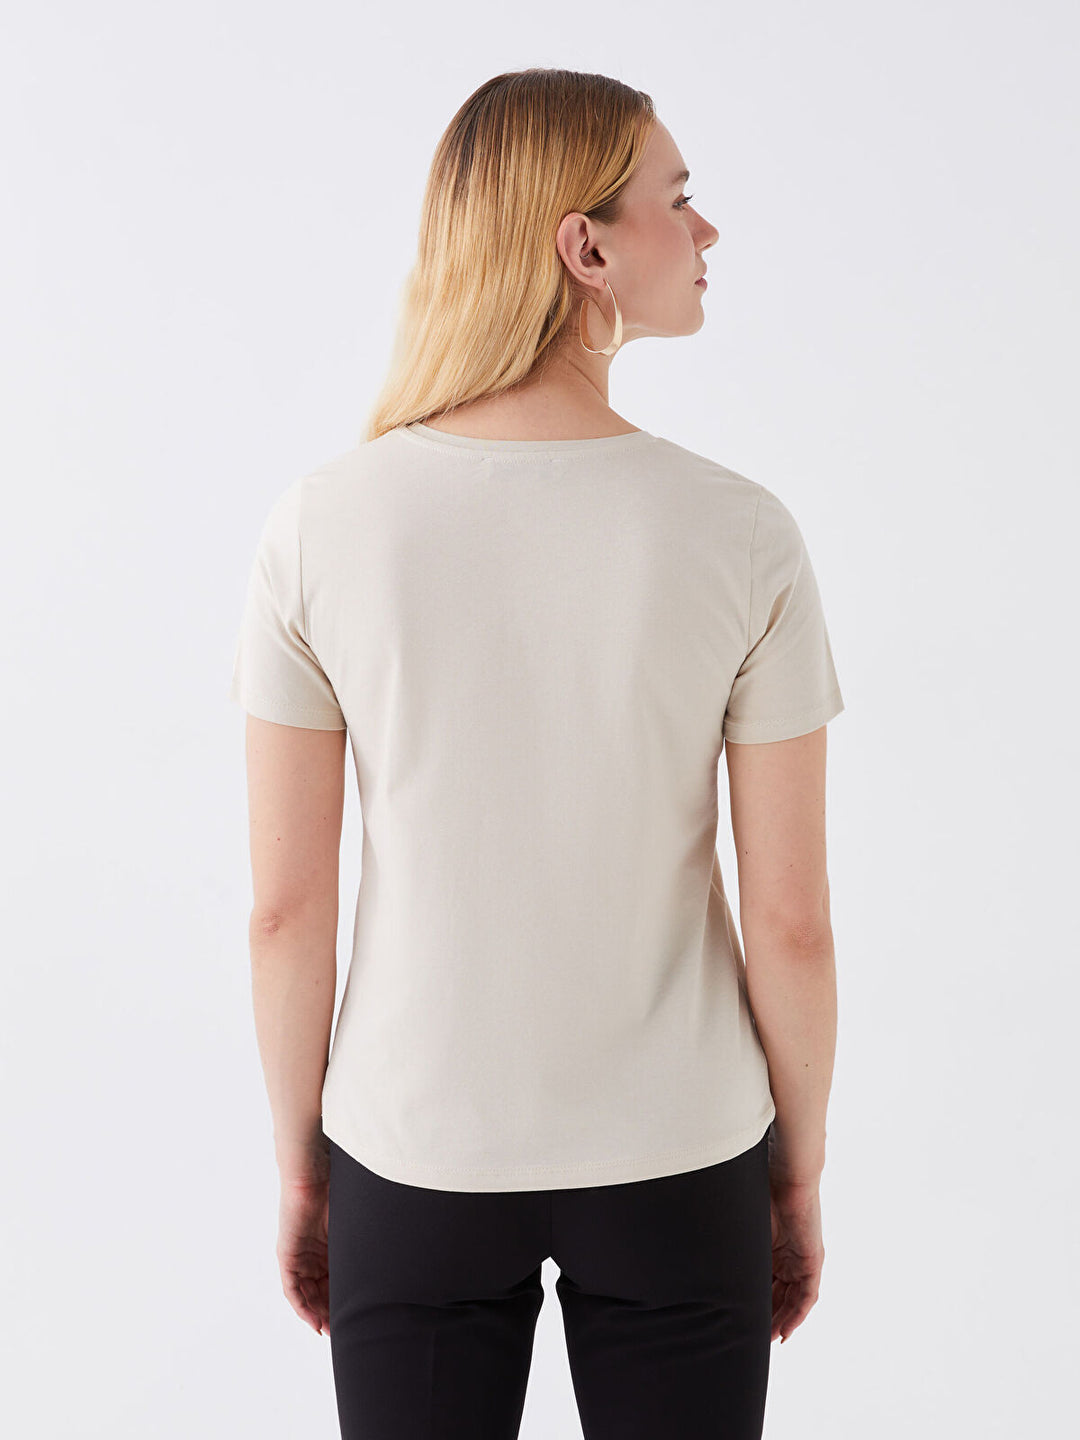 LCWAIKIKI Classic Crew Neck Printed Short Sleeve Women T-shirt